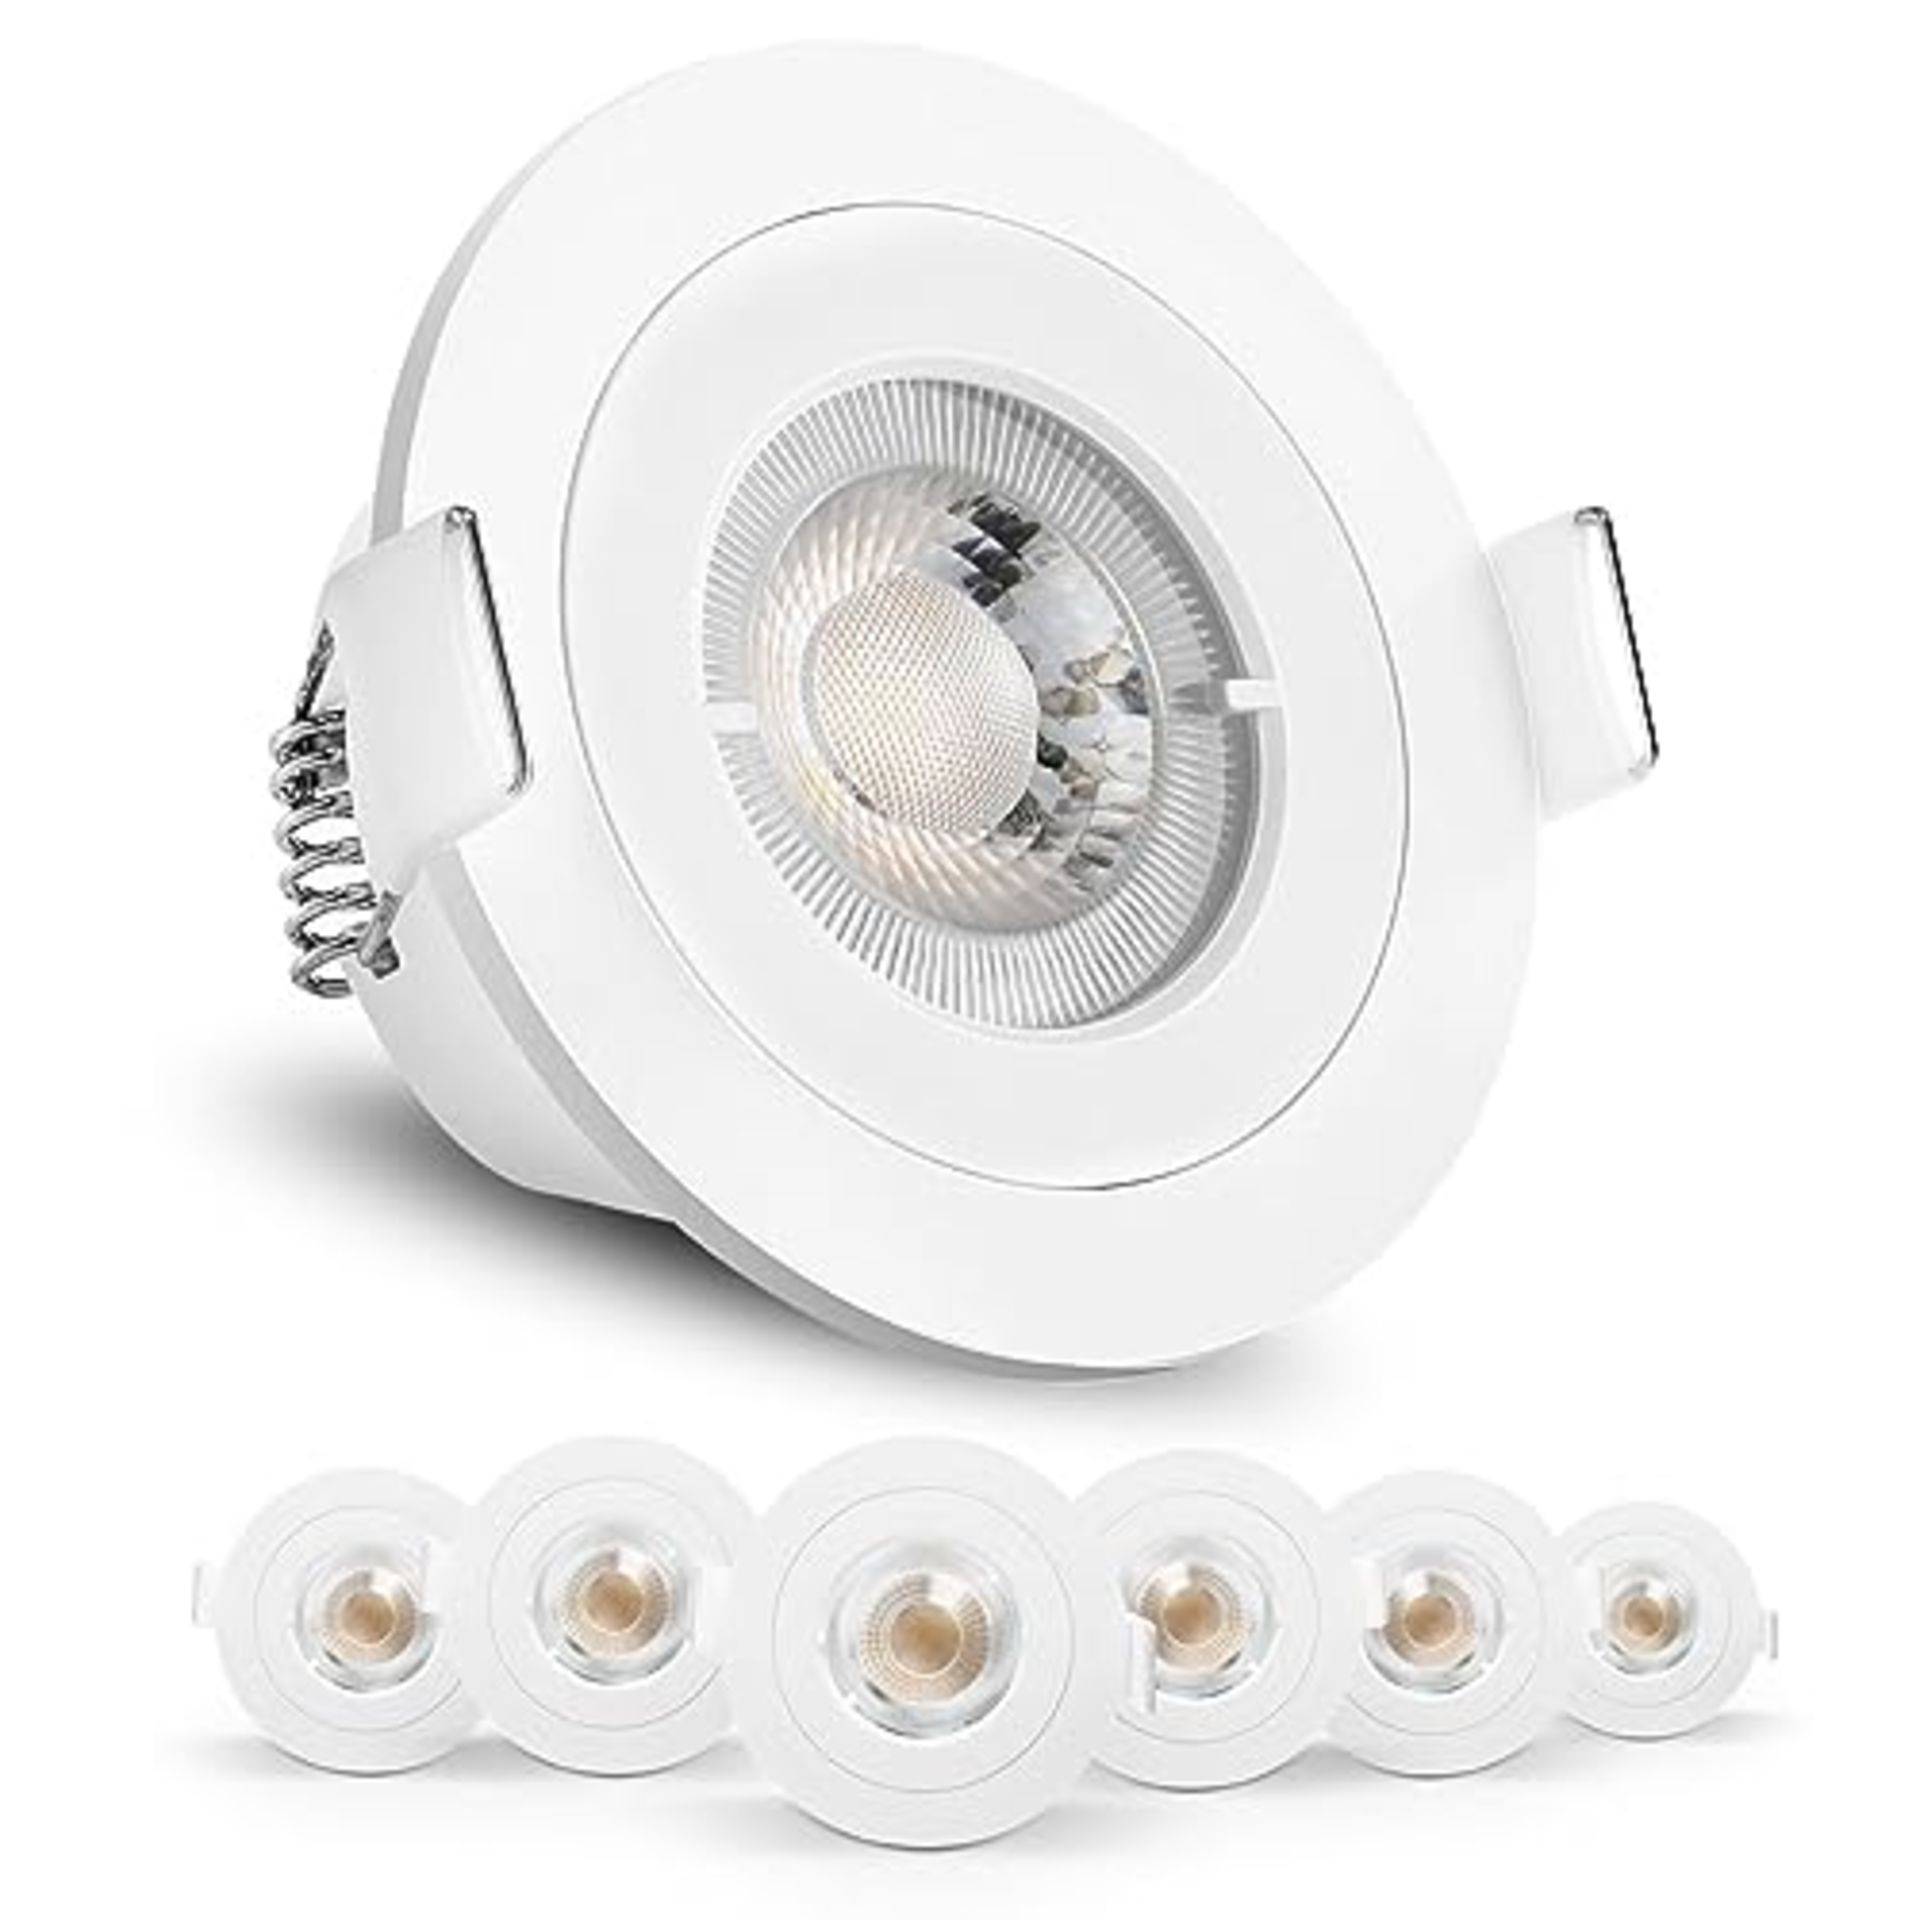 RRP £30.44 OREiN LED Recessed Ceiling Downlights Spotlights IP65